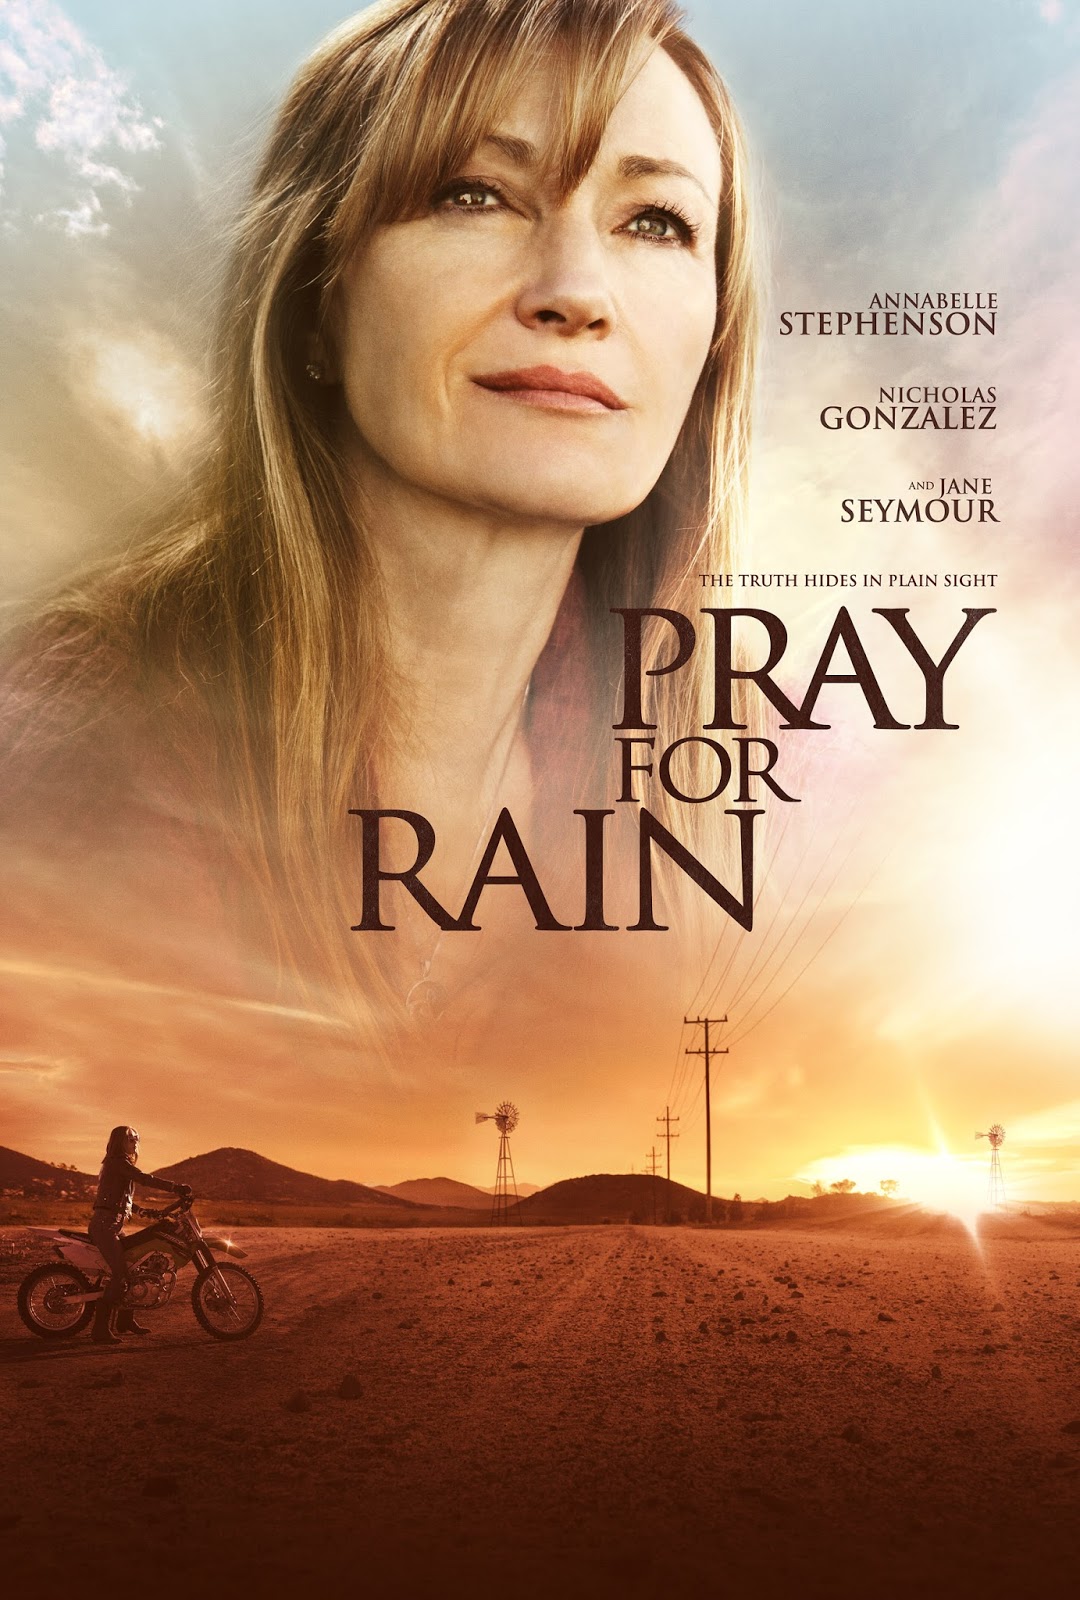 Pray for Rain 2017 - Full (HD)